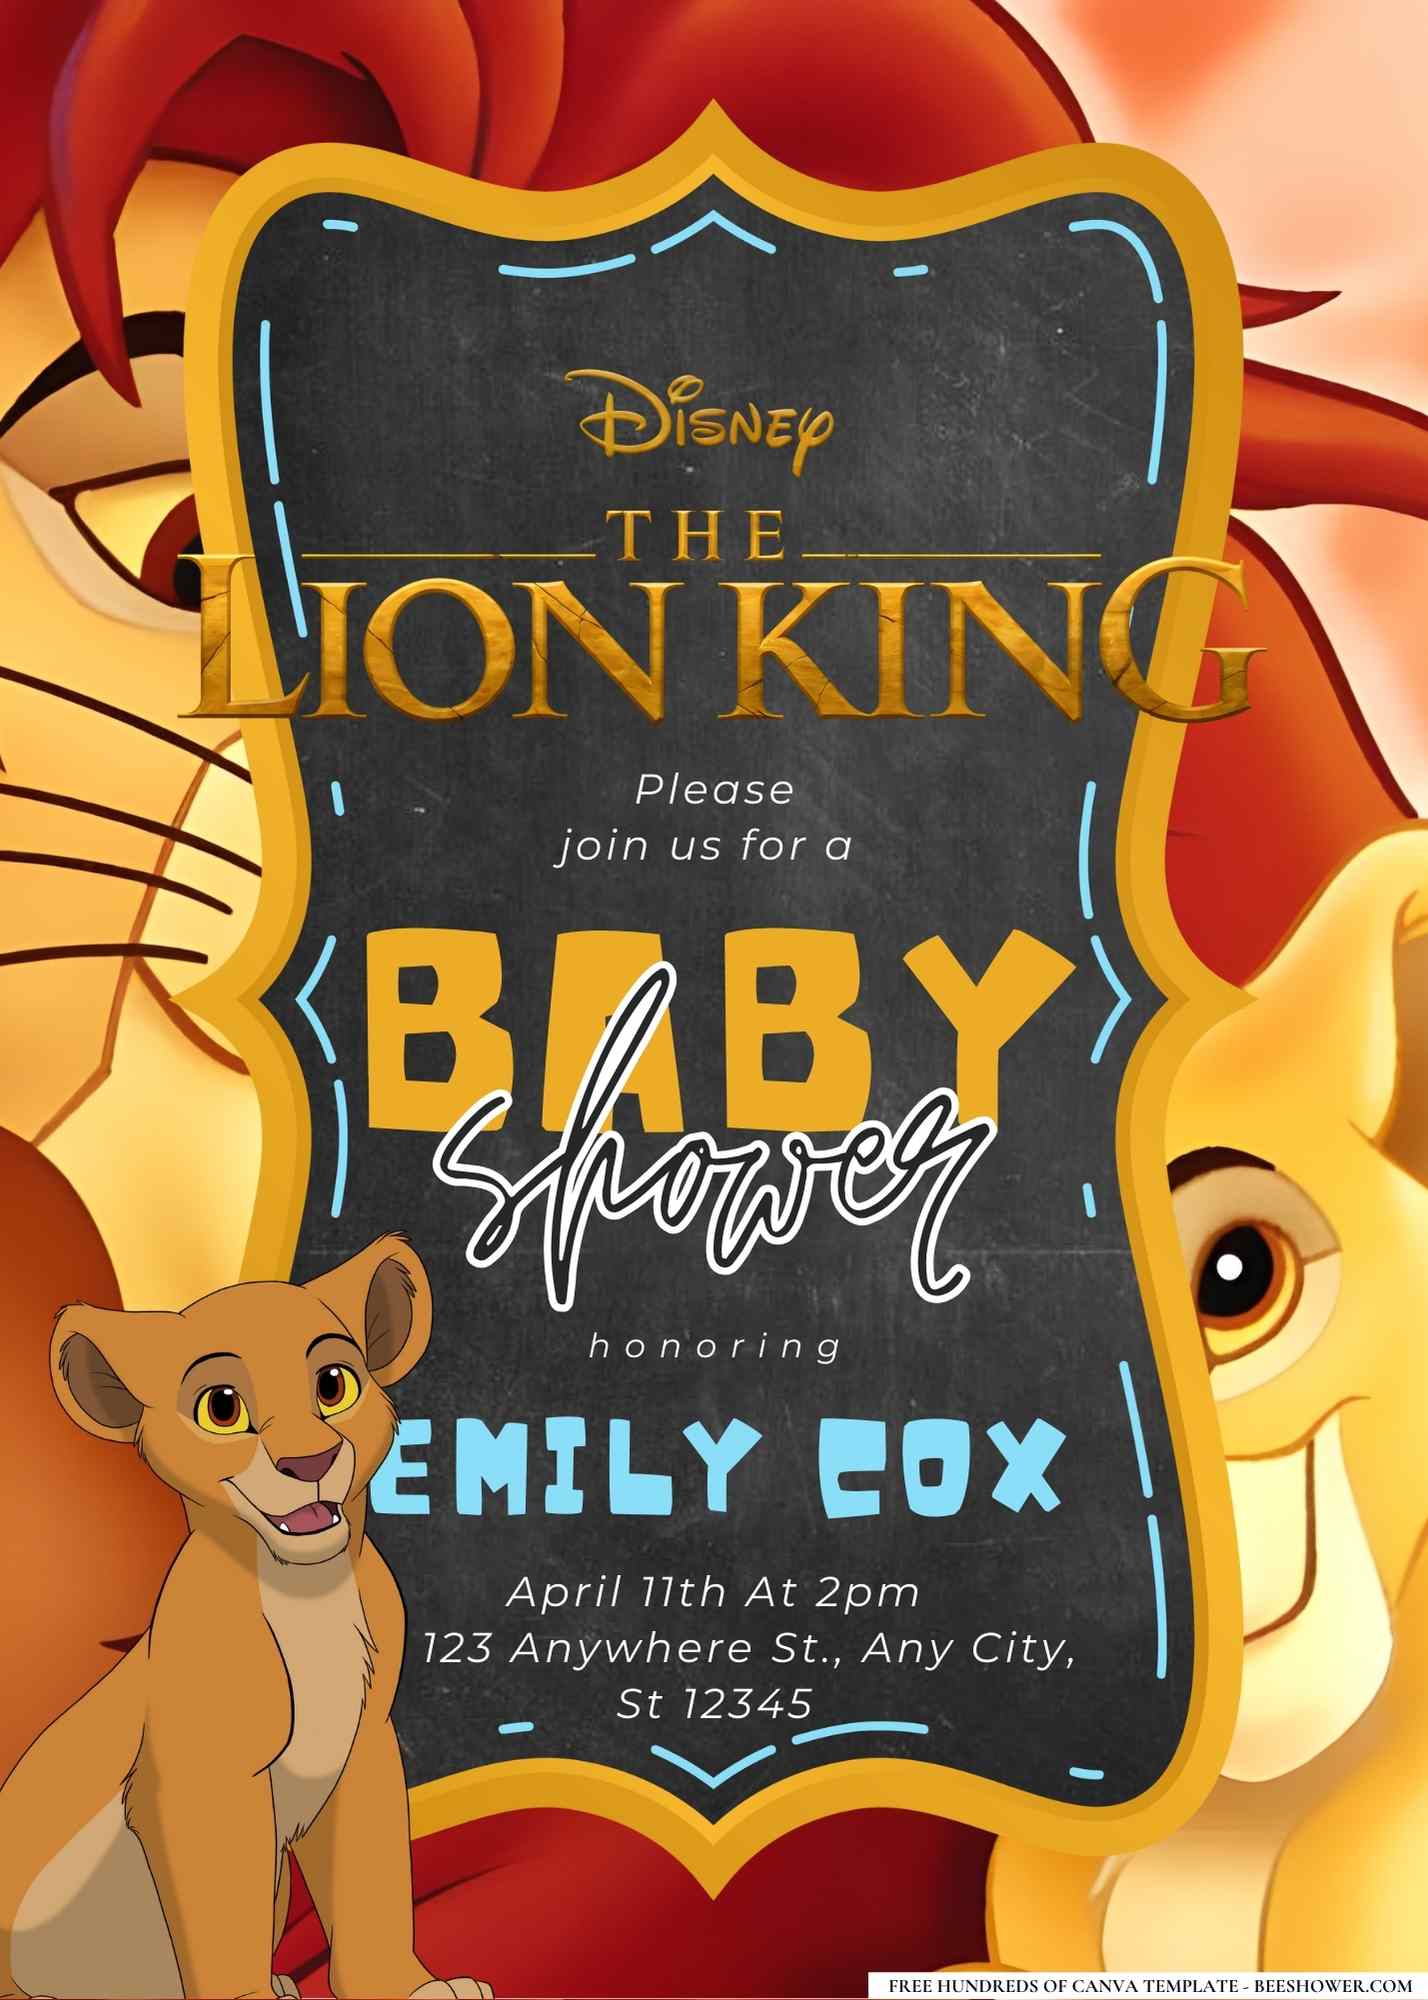 Simba (The Lion King) Baby Shower Invitation